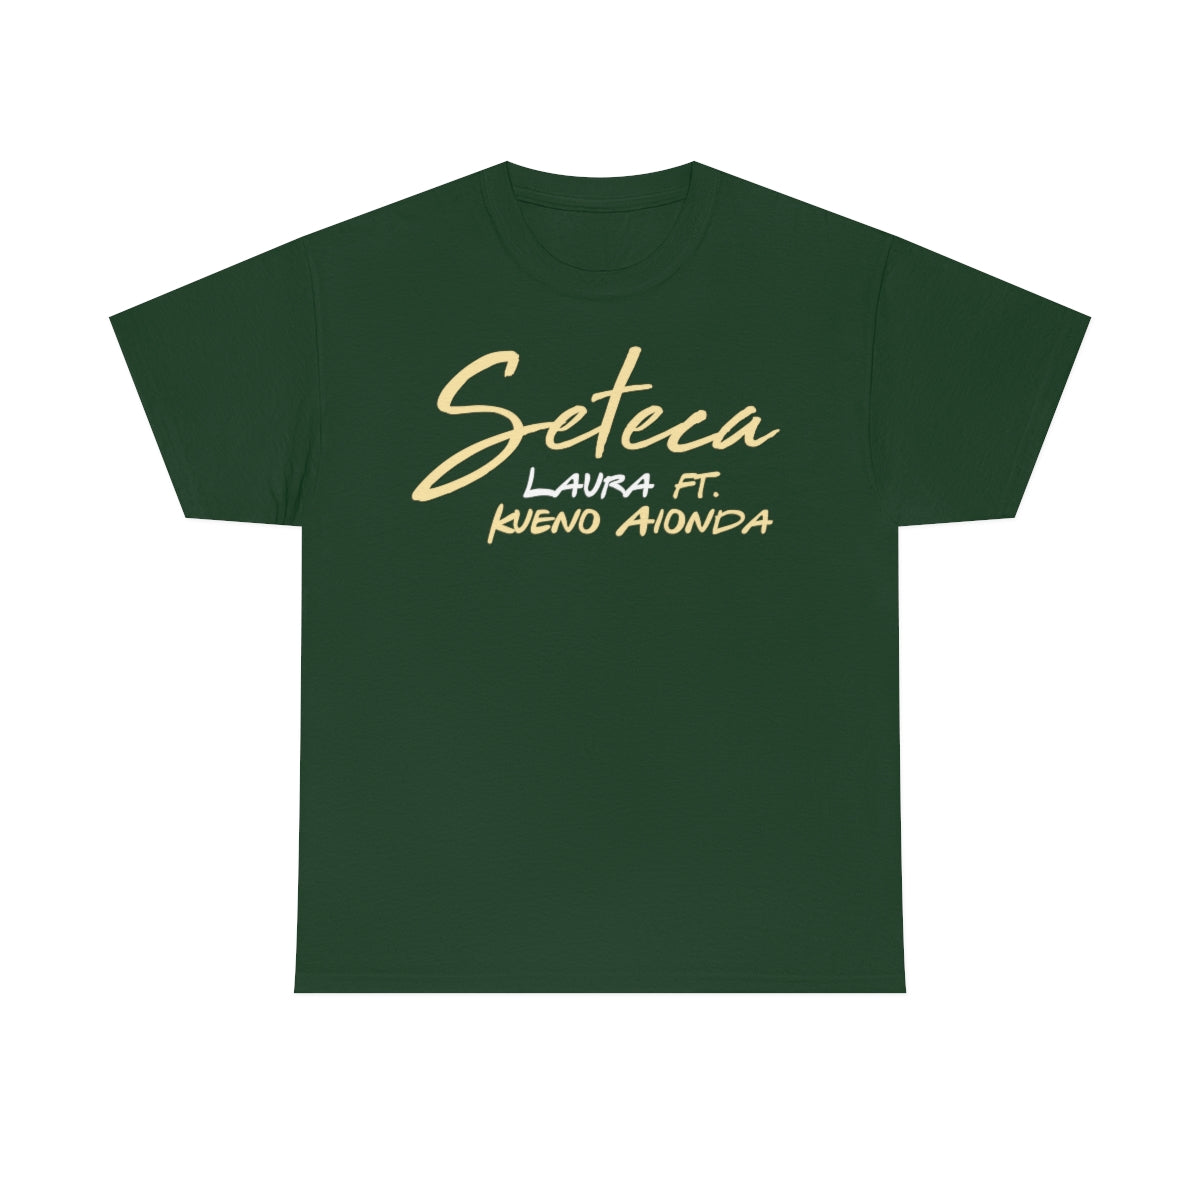 T-Shirt "Seteca - Laura"